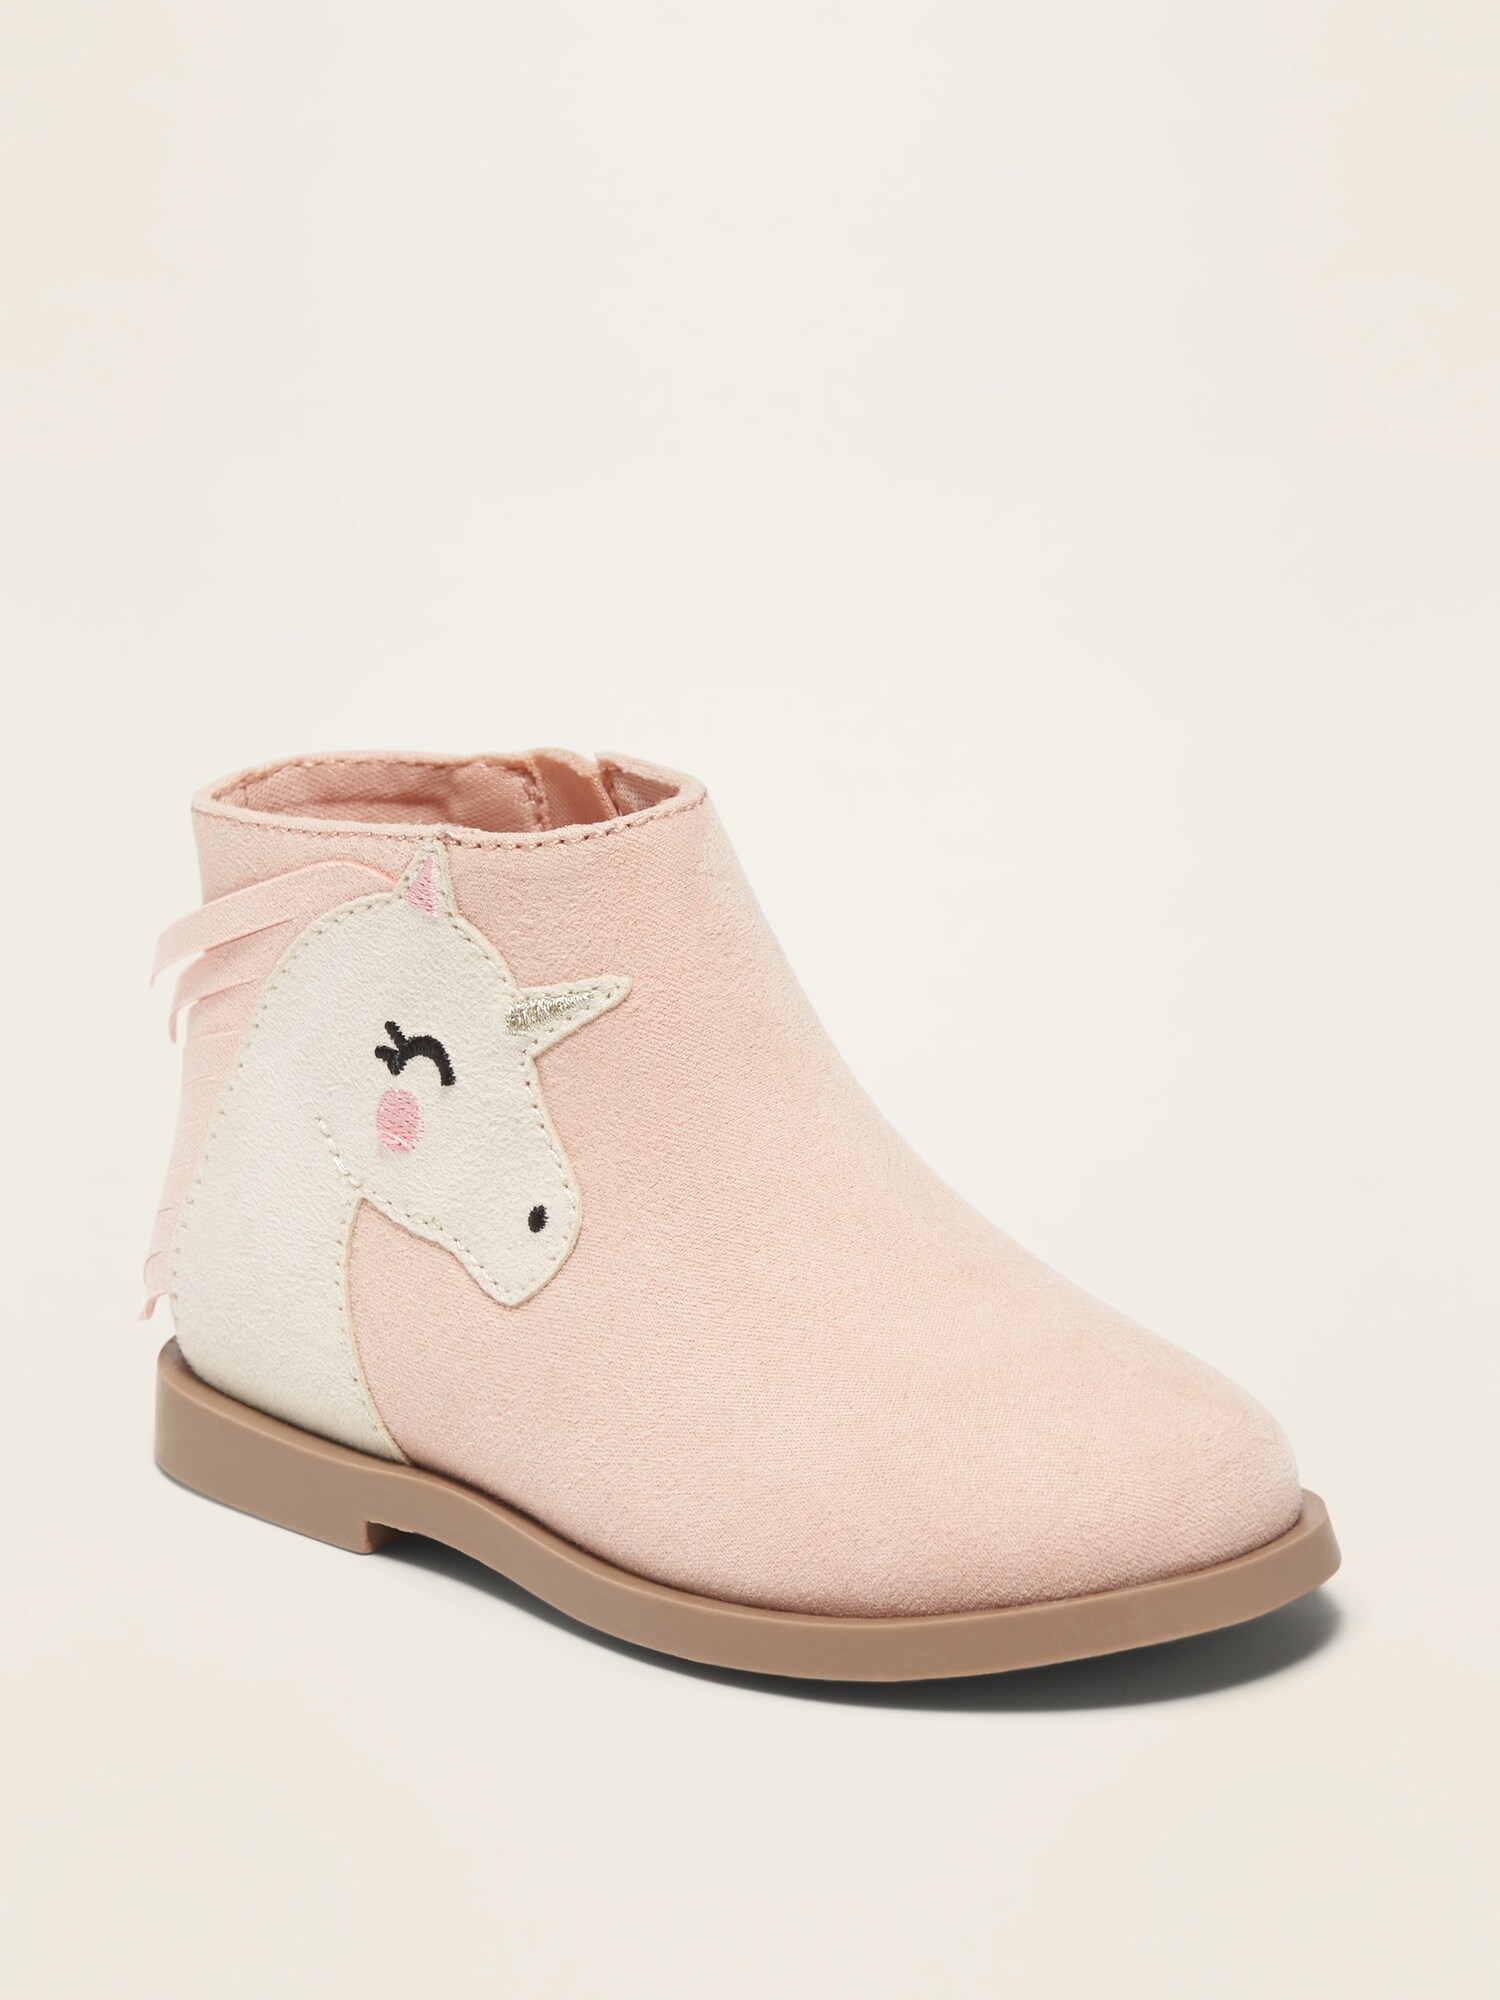 unicorn boots for little girls